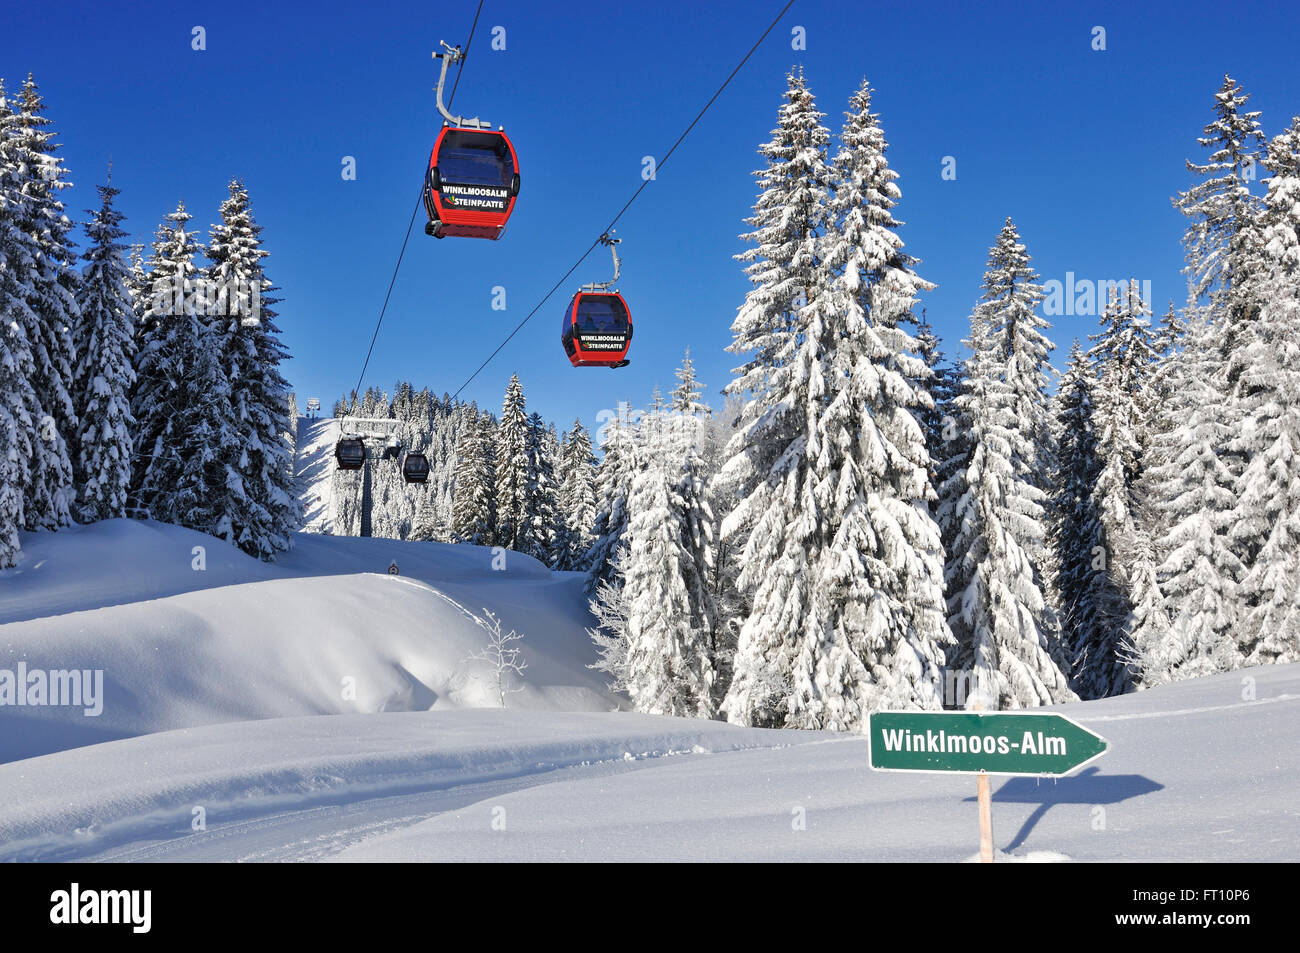 Overhead cable car, Winklmoosalm ski area, Reit im Winkl, Chiemgau, Bavaria, Germany Stock Photo